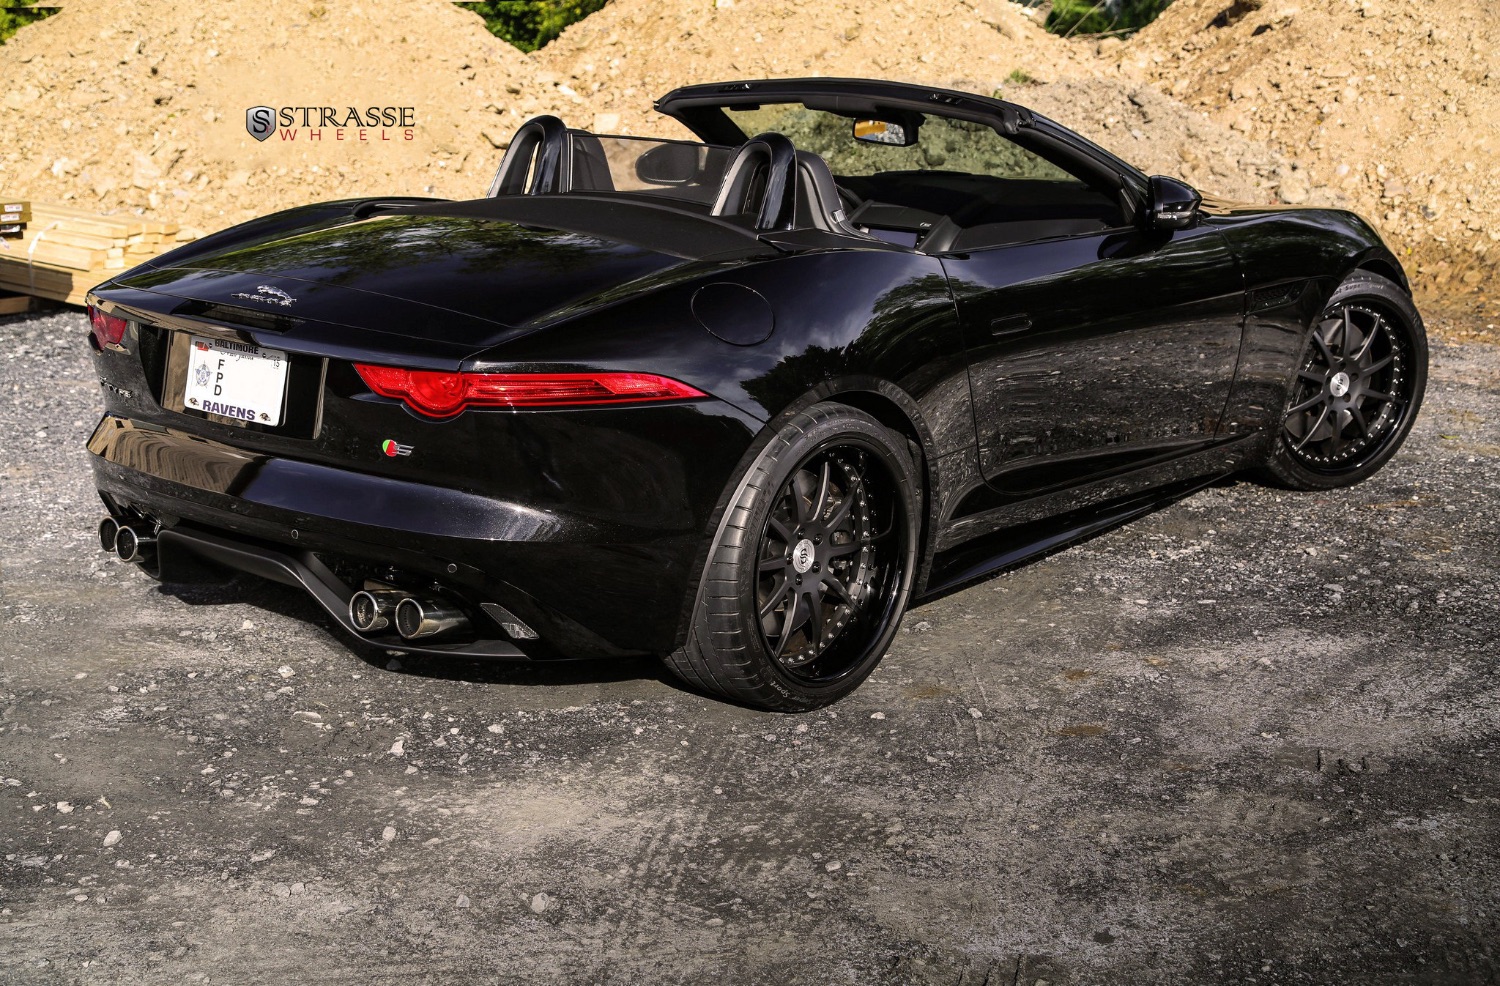 Jaguar-F-Type-strasse-wheels3